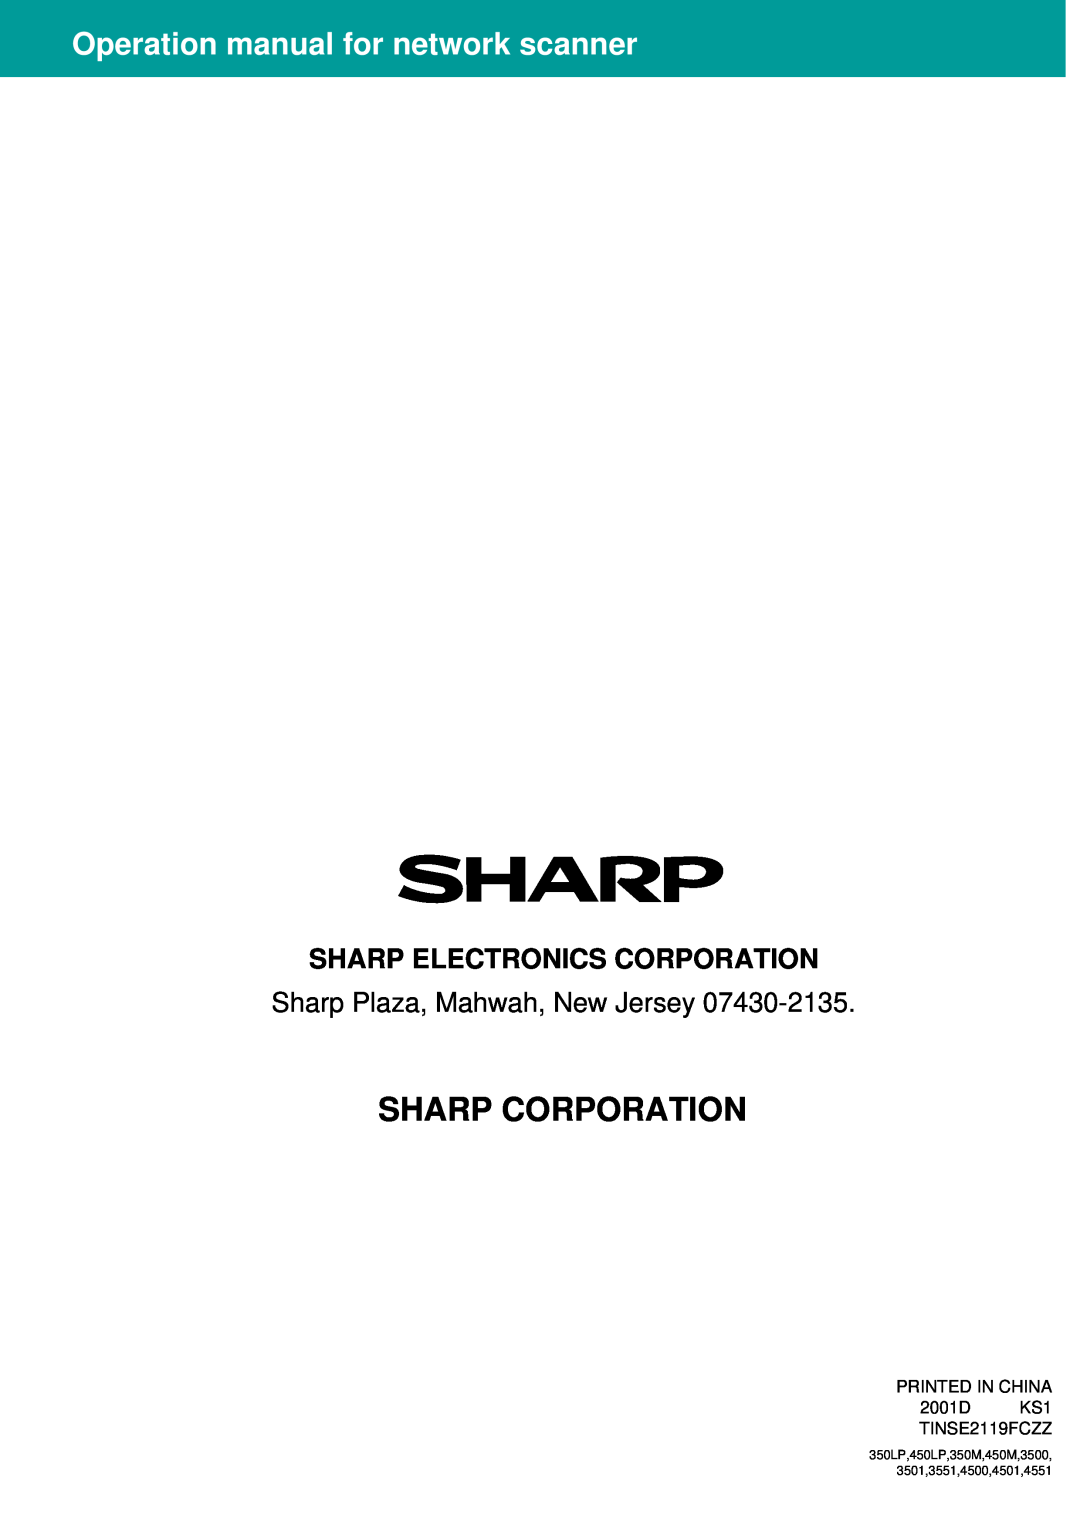 Sharp 4501, 4500, 450M, 3501, 350M Sharp Corporation, Sharp Electronics Corporation, Operation manual for network scanner 